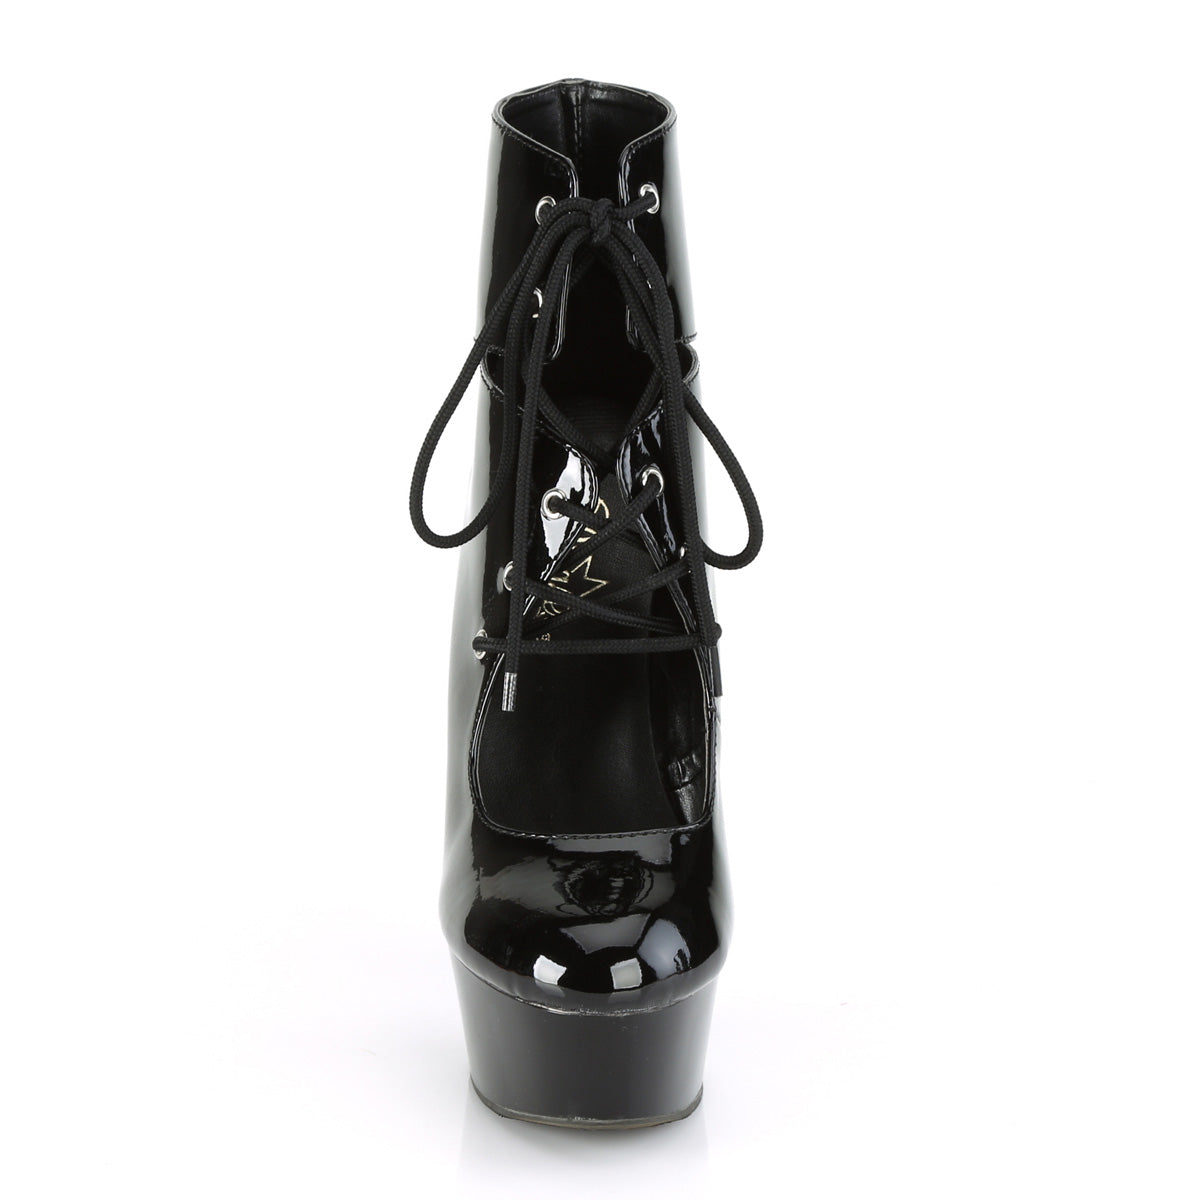 DELIGHT-600-22 Black Patent/Black Ankle Boot Pleaser